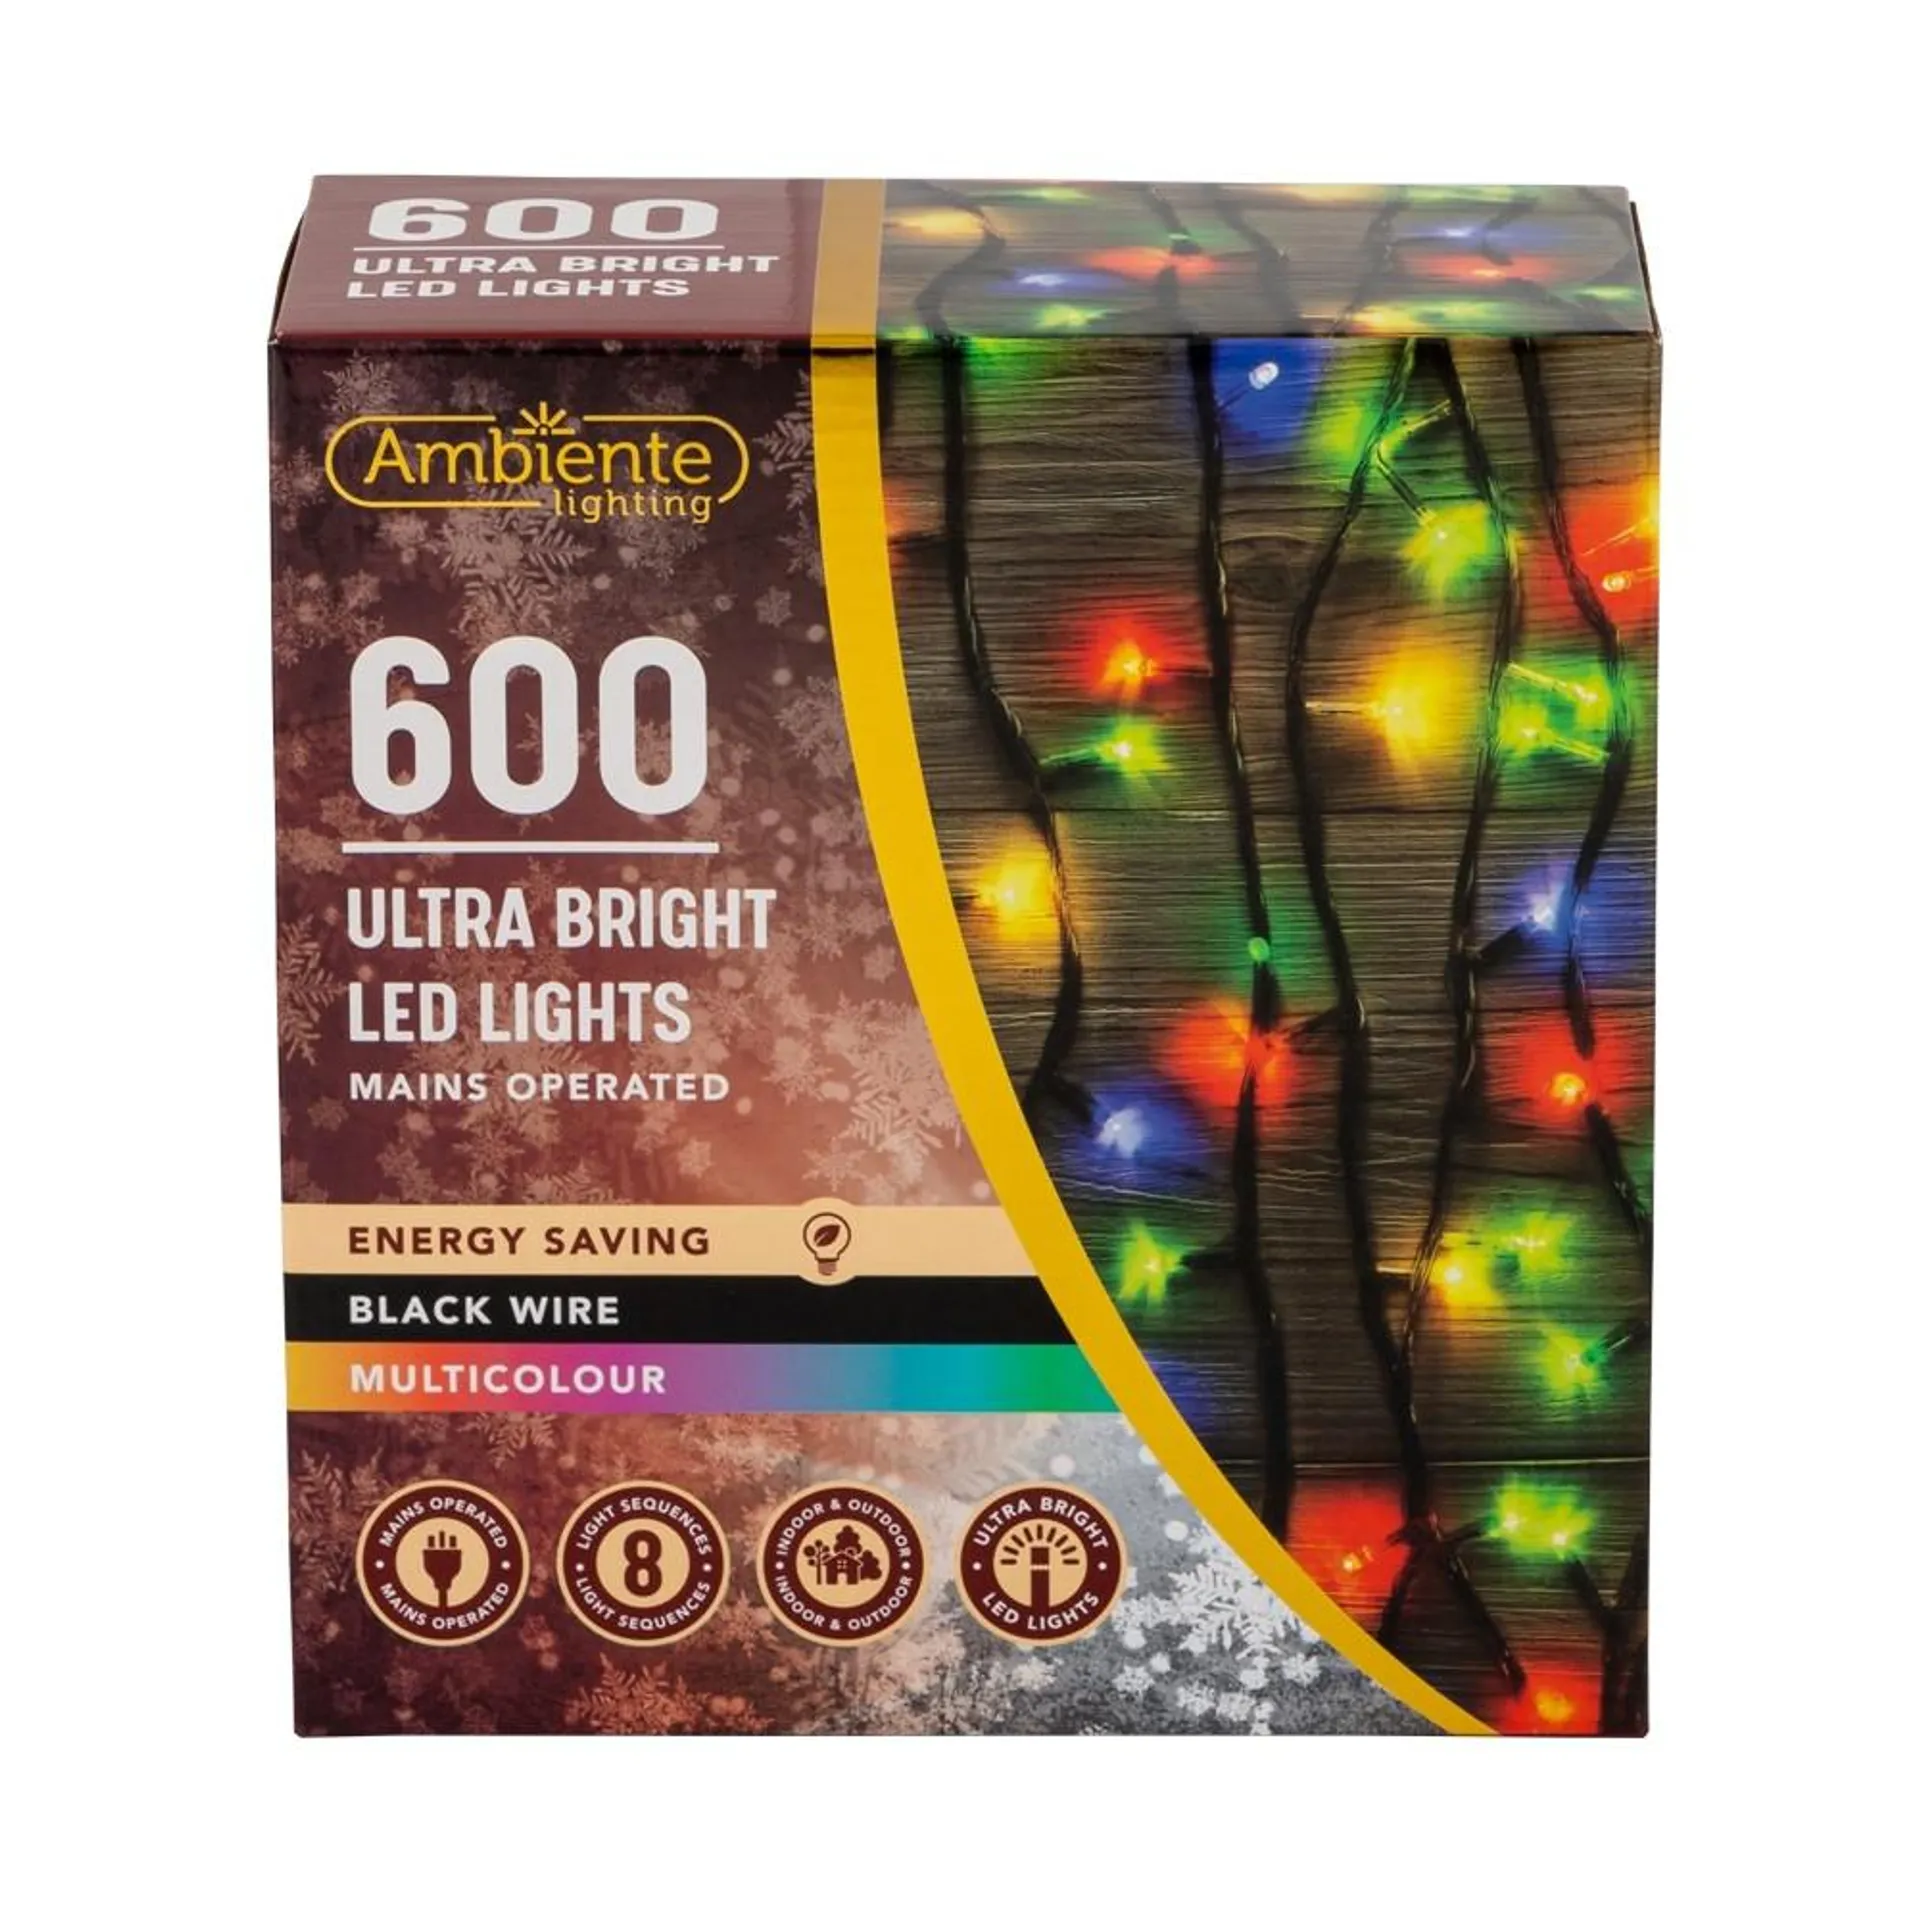 600 ULTRA BRIGHT LED LIGHTS - MULTICOLOUR